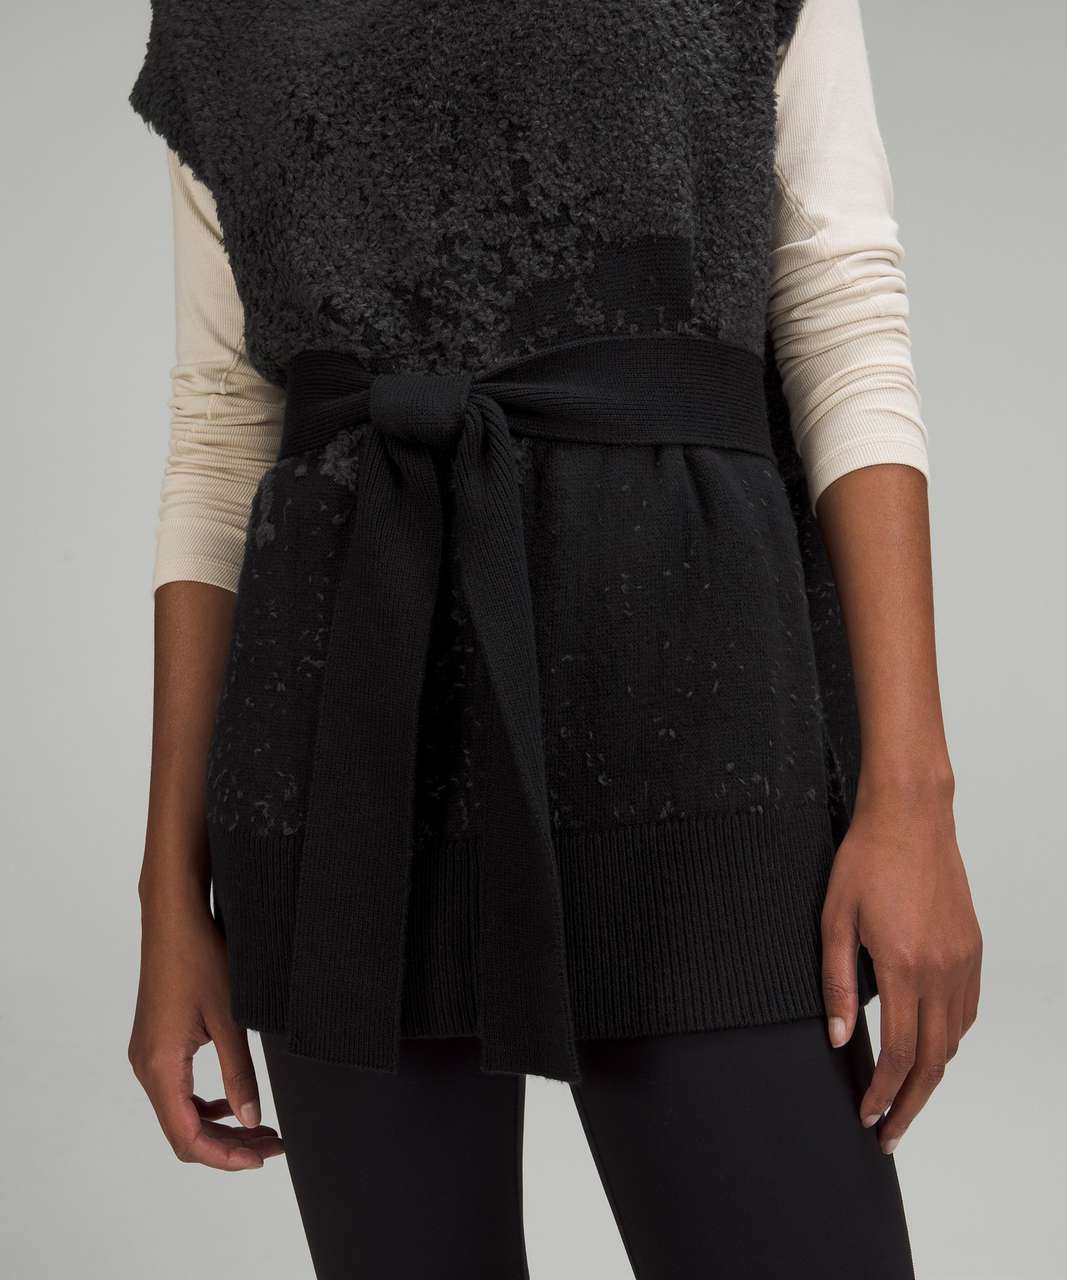 Lululemon Ombre Knit Textured Poncho - Black / Graphite Grey